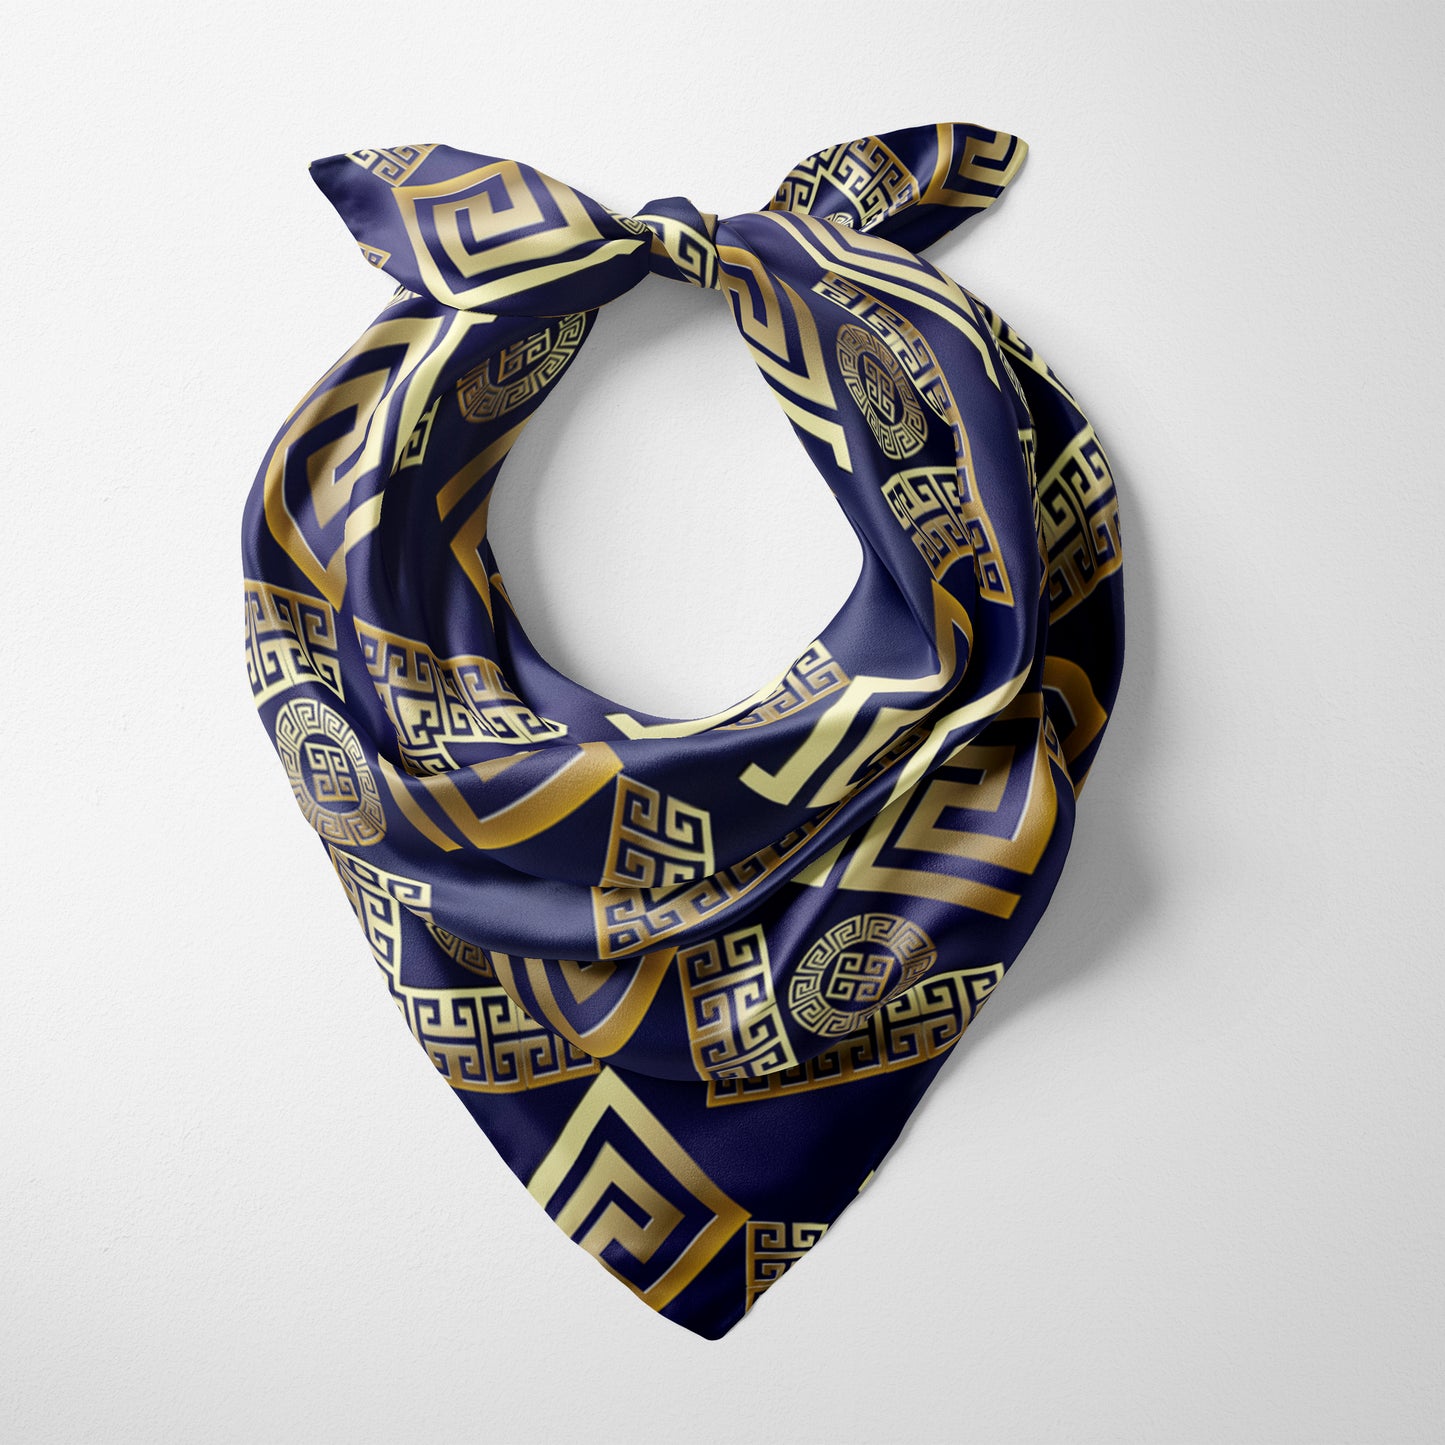 Custom Satin Charmuse Bandanas, Personalized Photo Image Head Wrap and Scarves